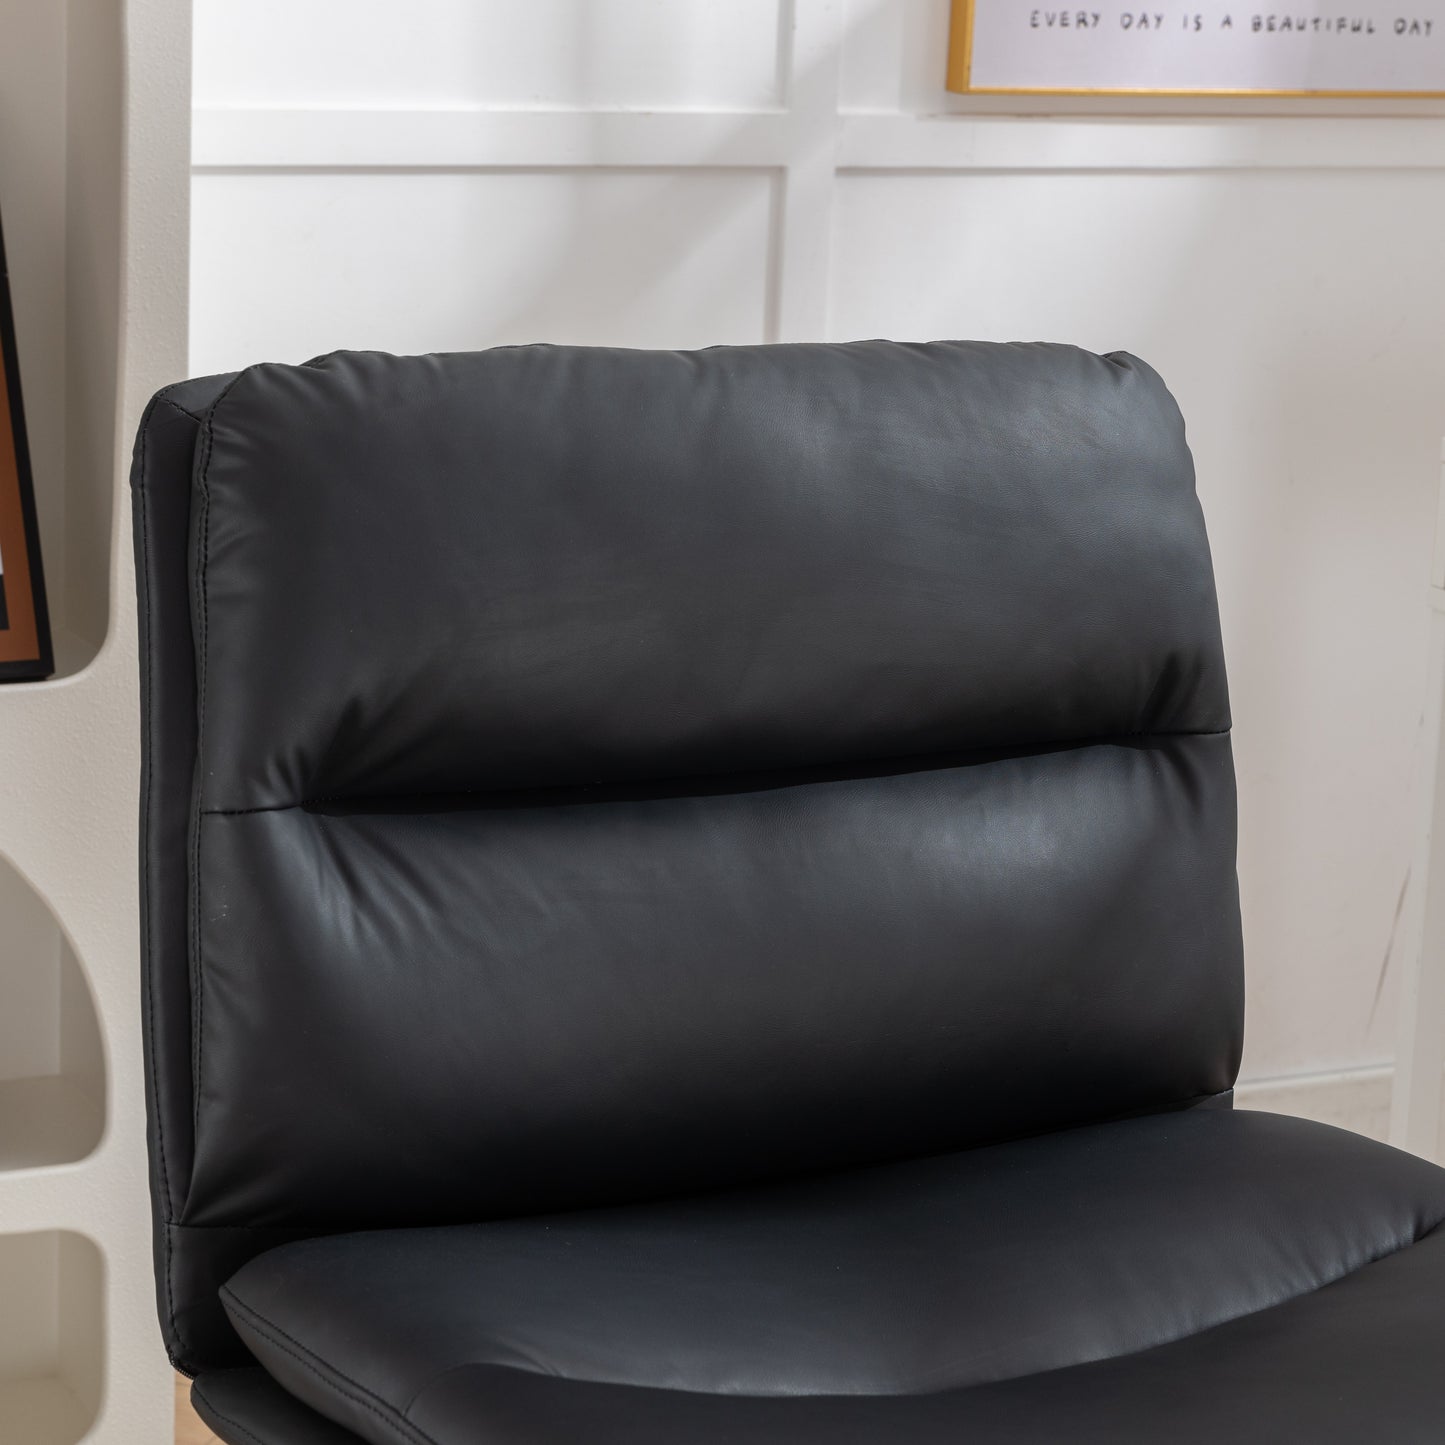 Bizerte Adjustable Swivel Criss Cross Chair, Wide Seat Office Chair Vanity Chair